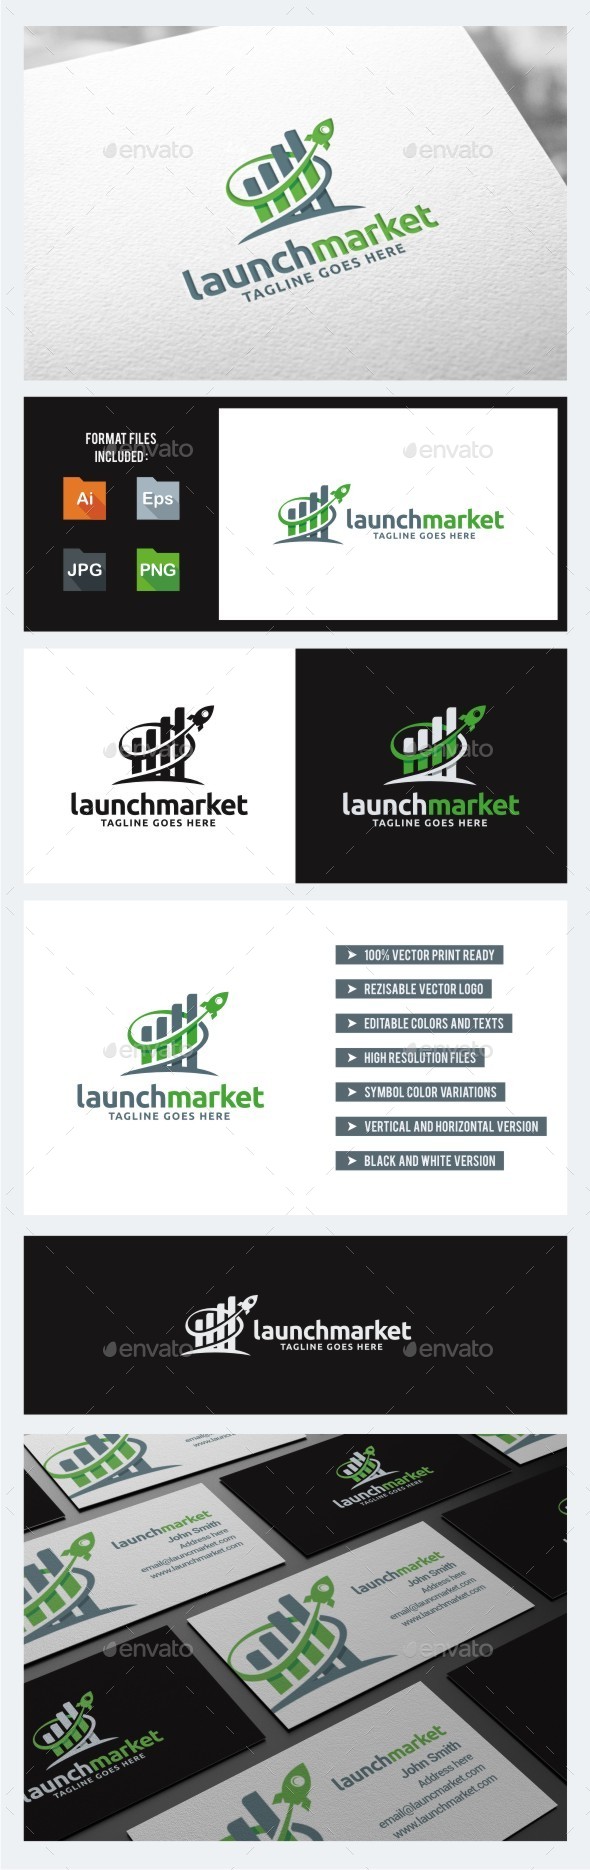 Launch Market - Rocket Logo Template